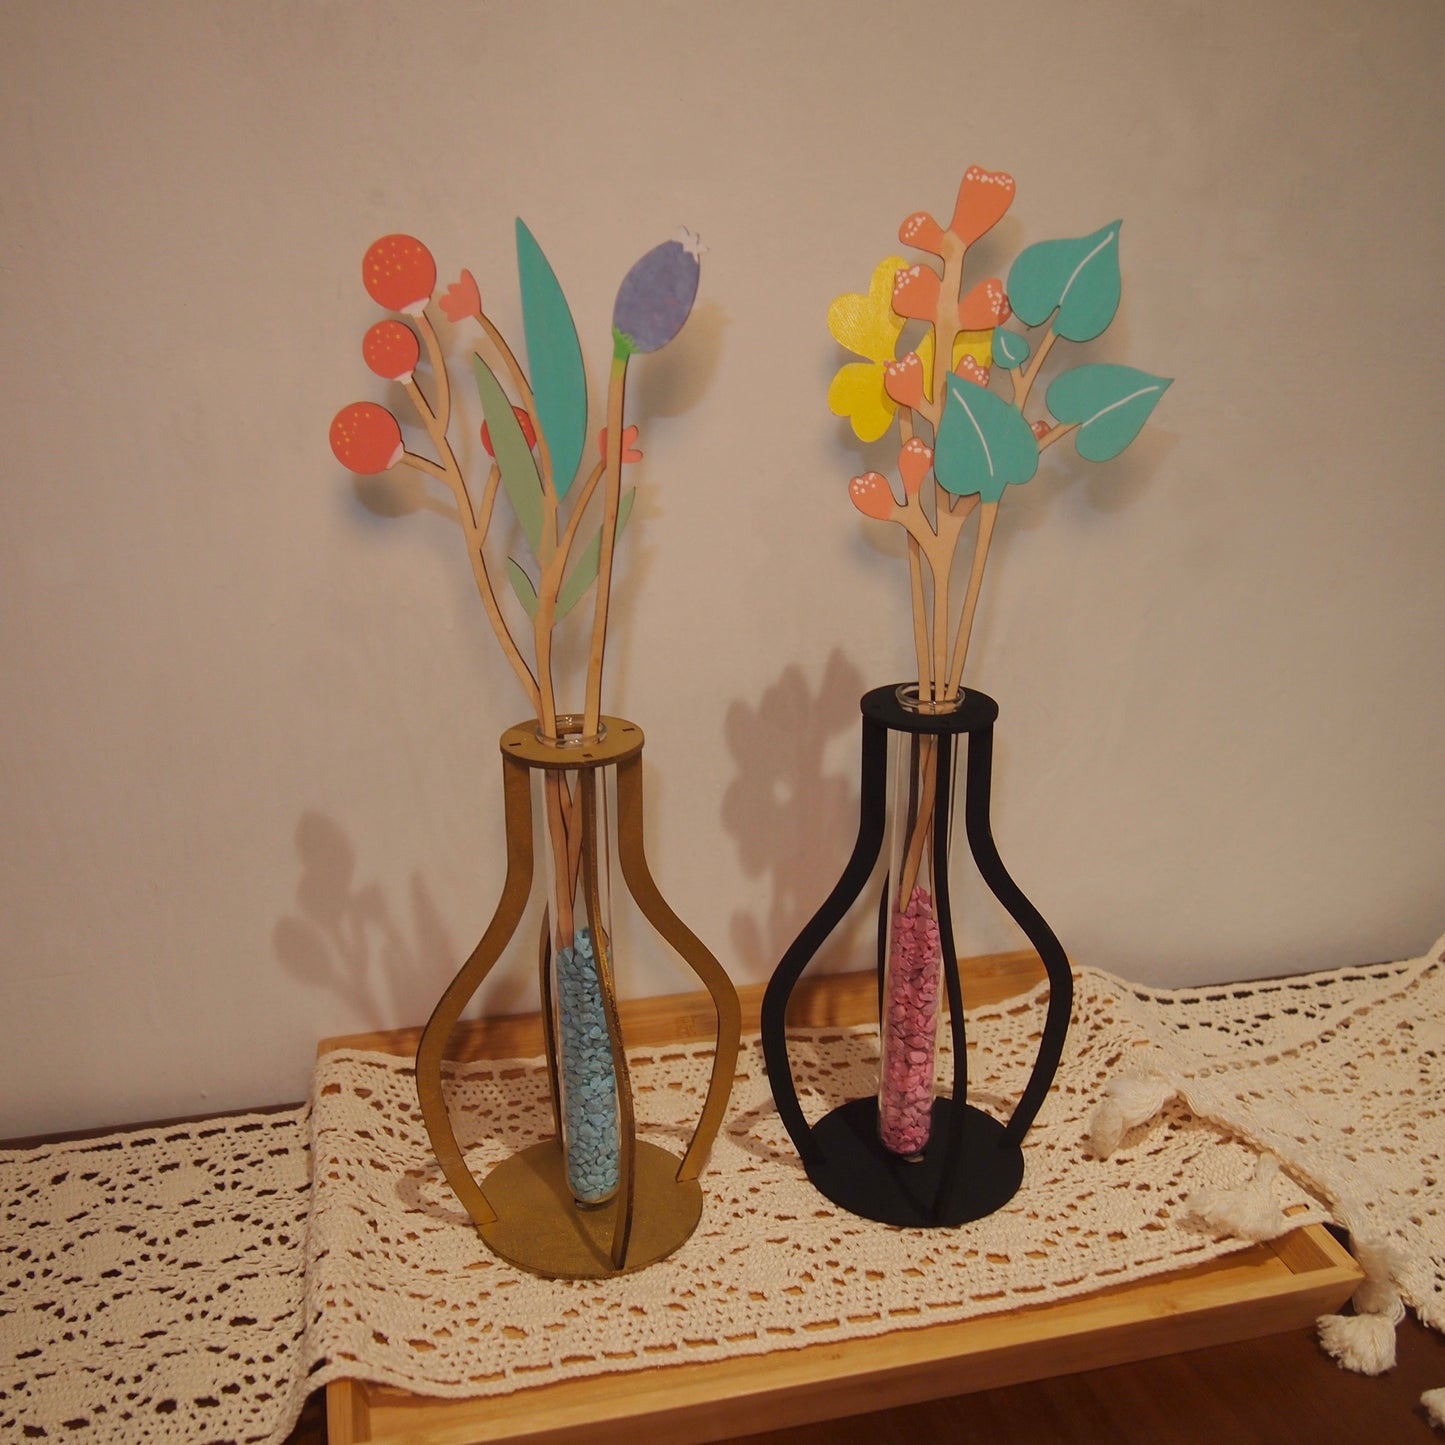 DIY Diffuse Wooden Flower Workshop